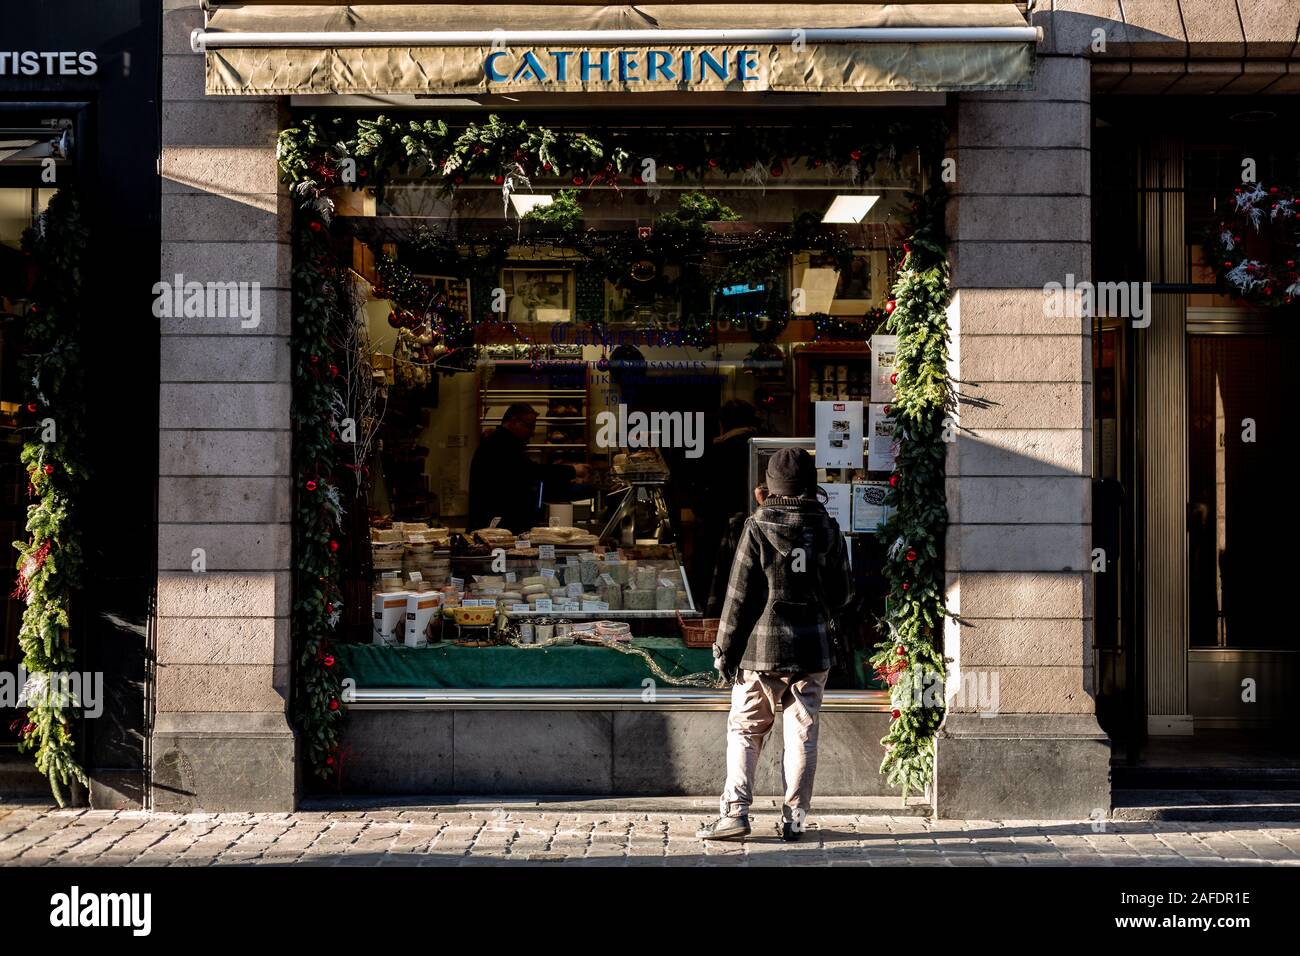 Catherine, food shop in Brussels, Belgium Stock Photo